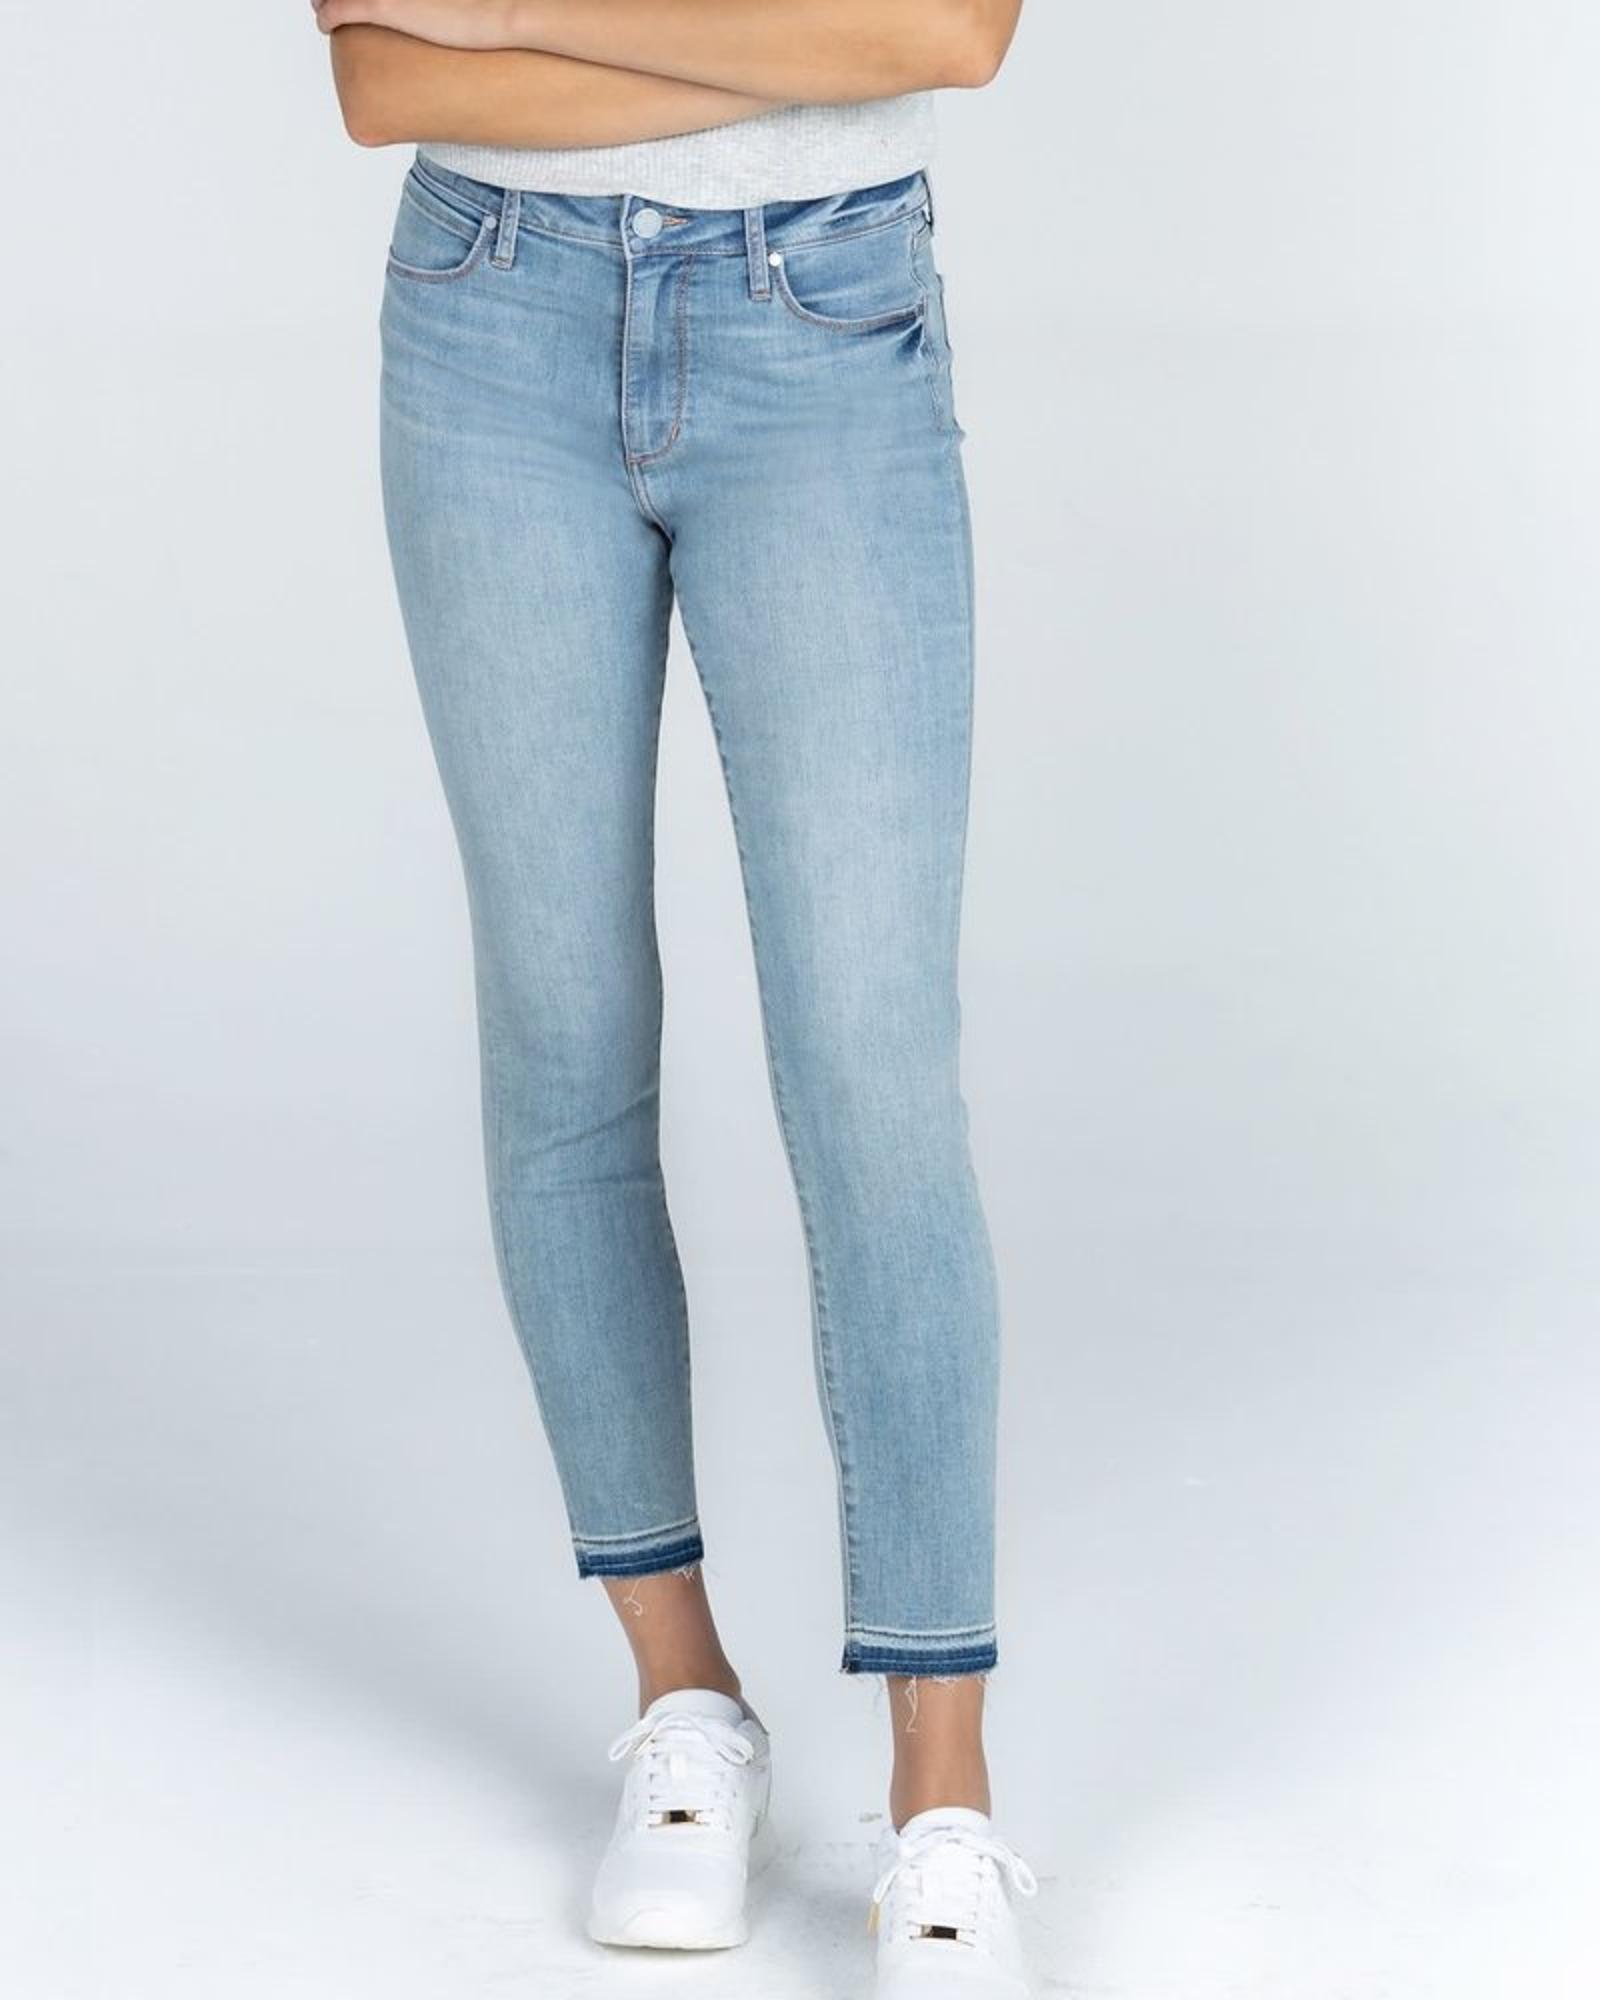 Heather Oak Park Skinny Jeans